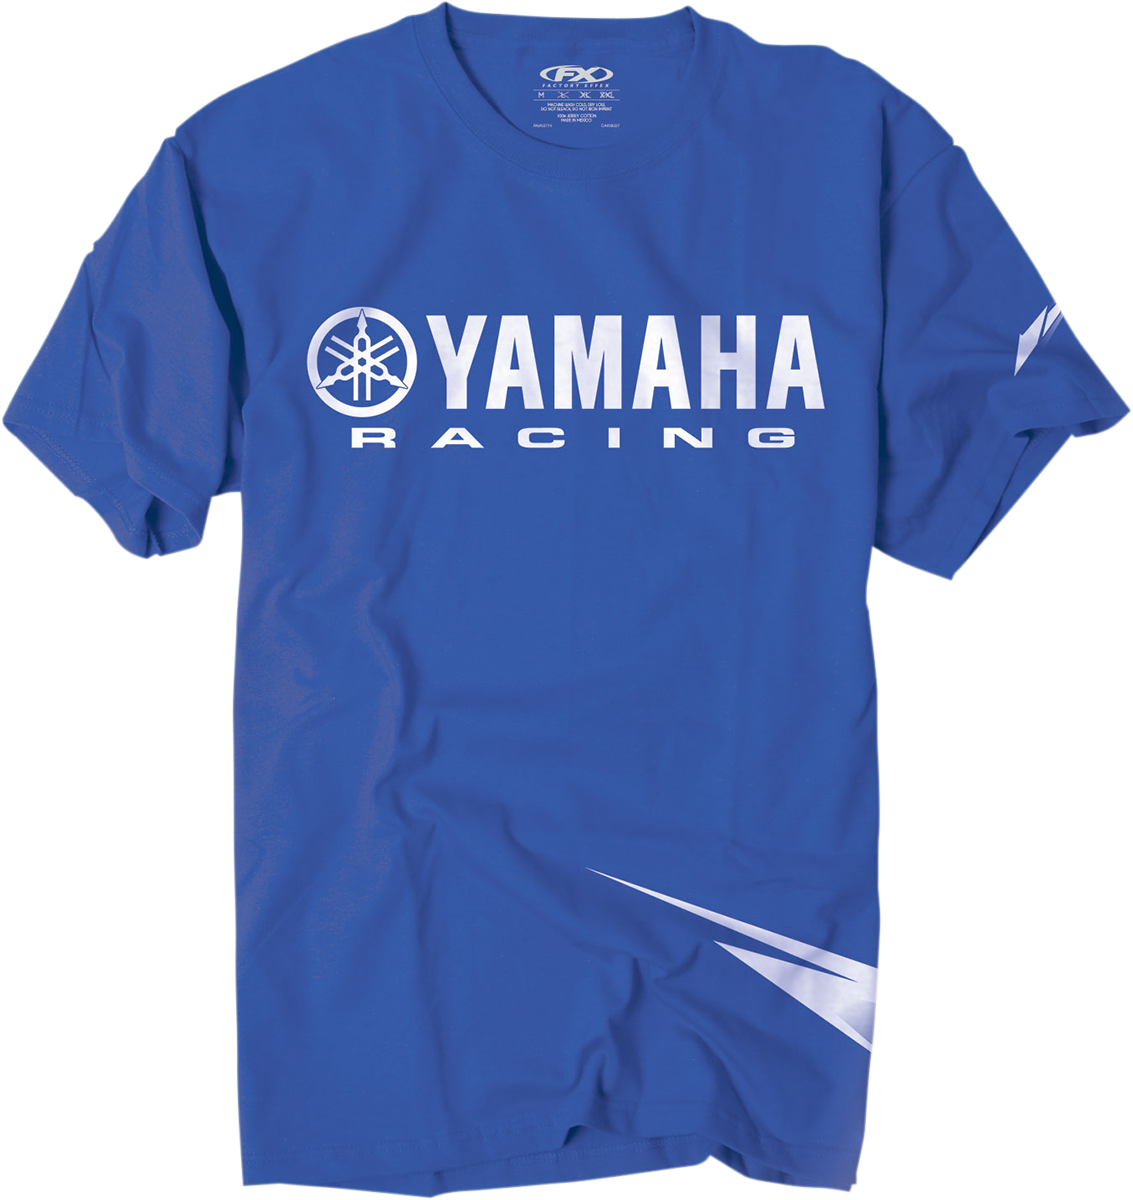 FACTORY EFFEX Camiseta estroboscópica Yamaha - Azul - Mediana 12-88160 